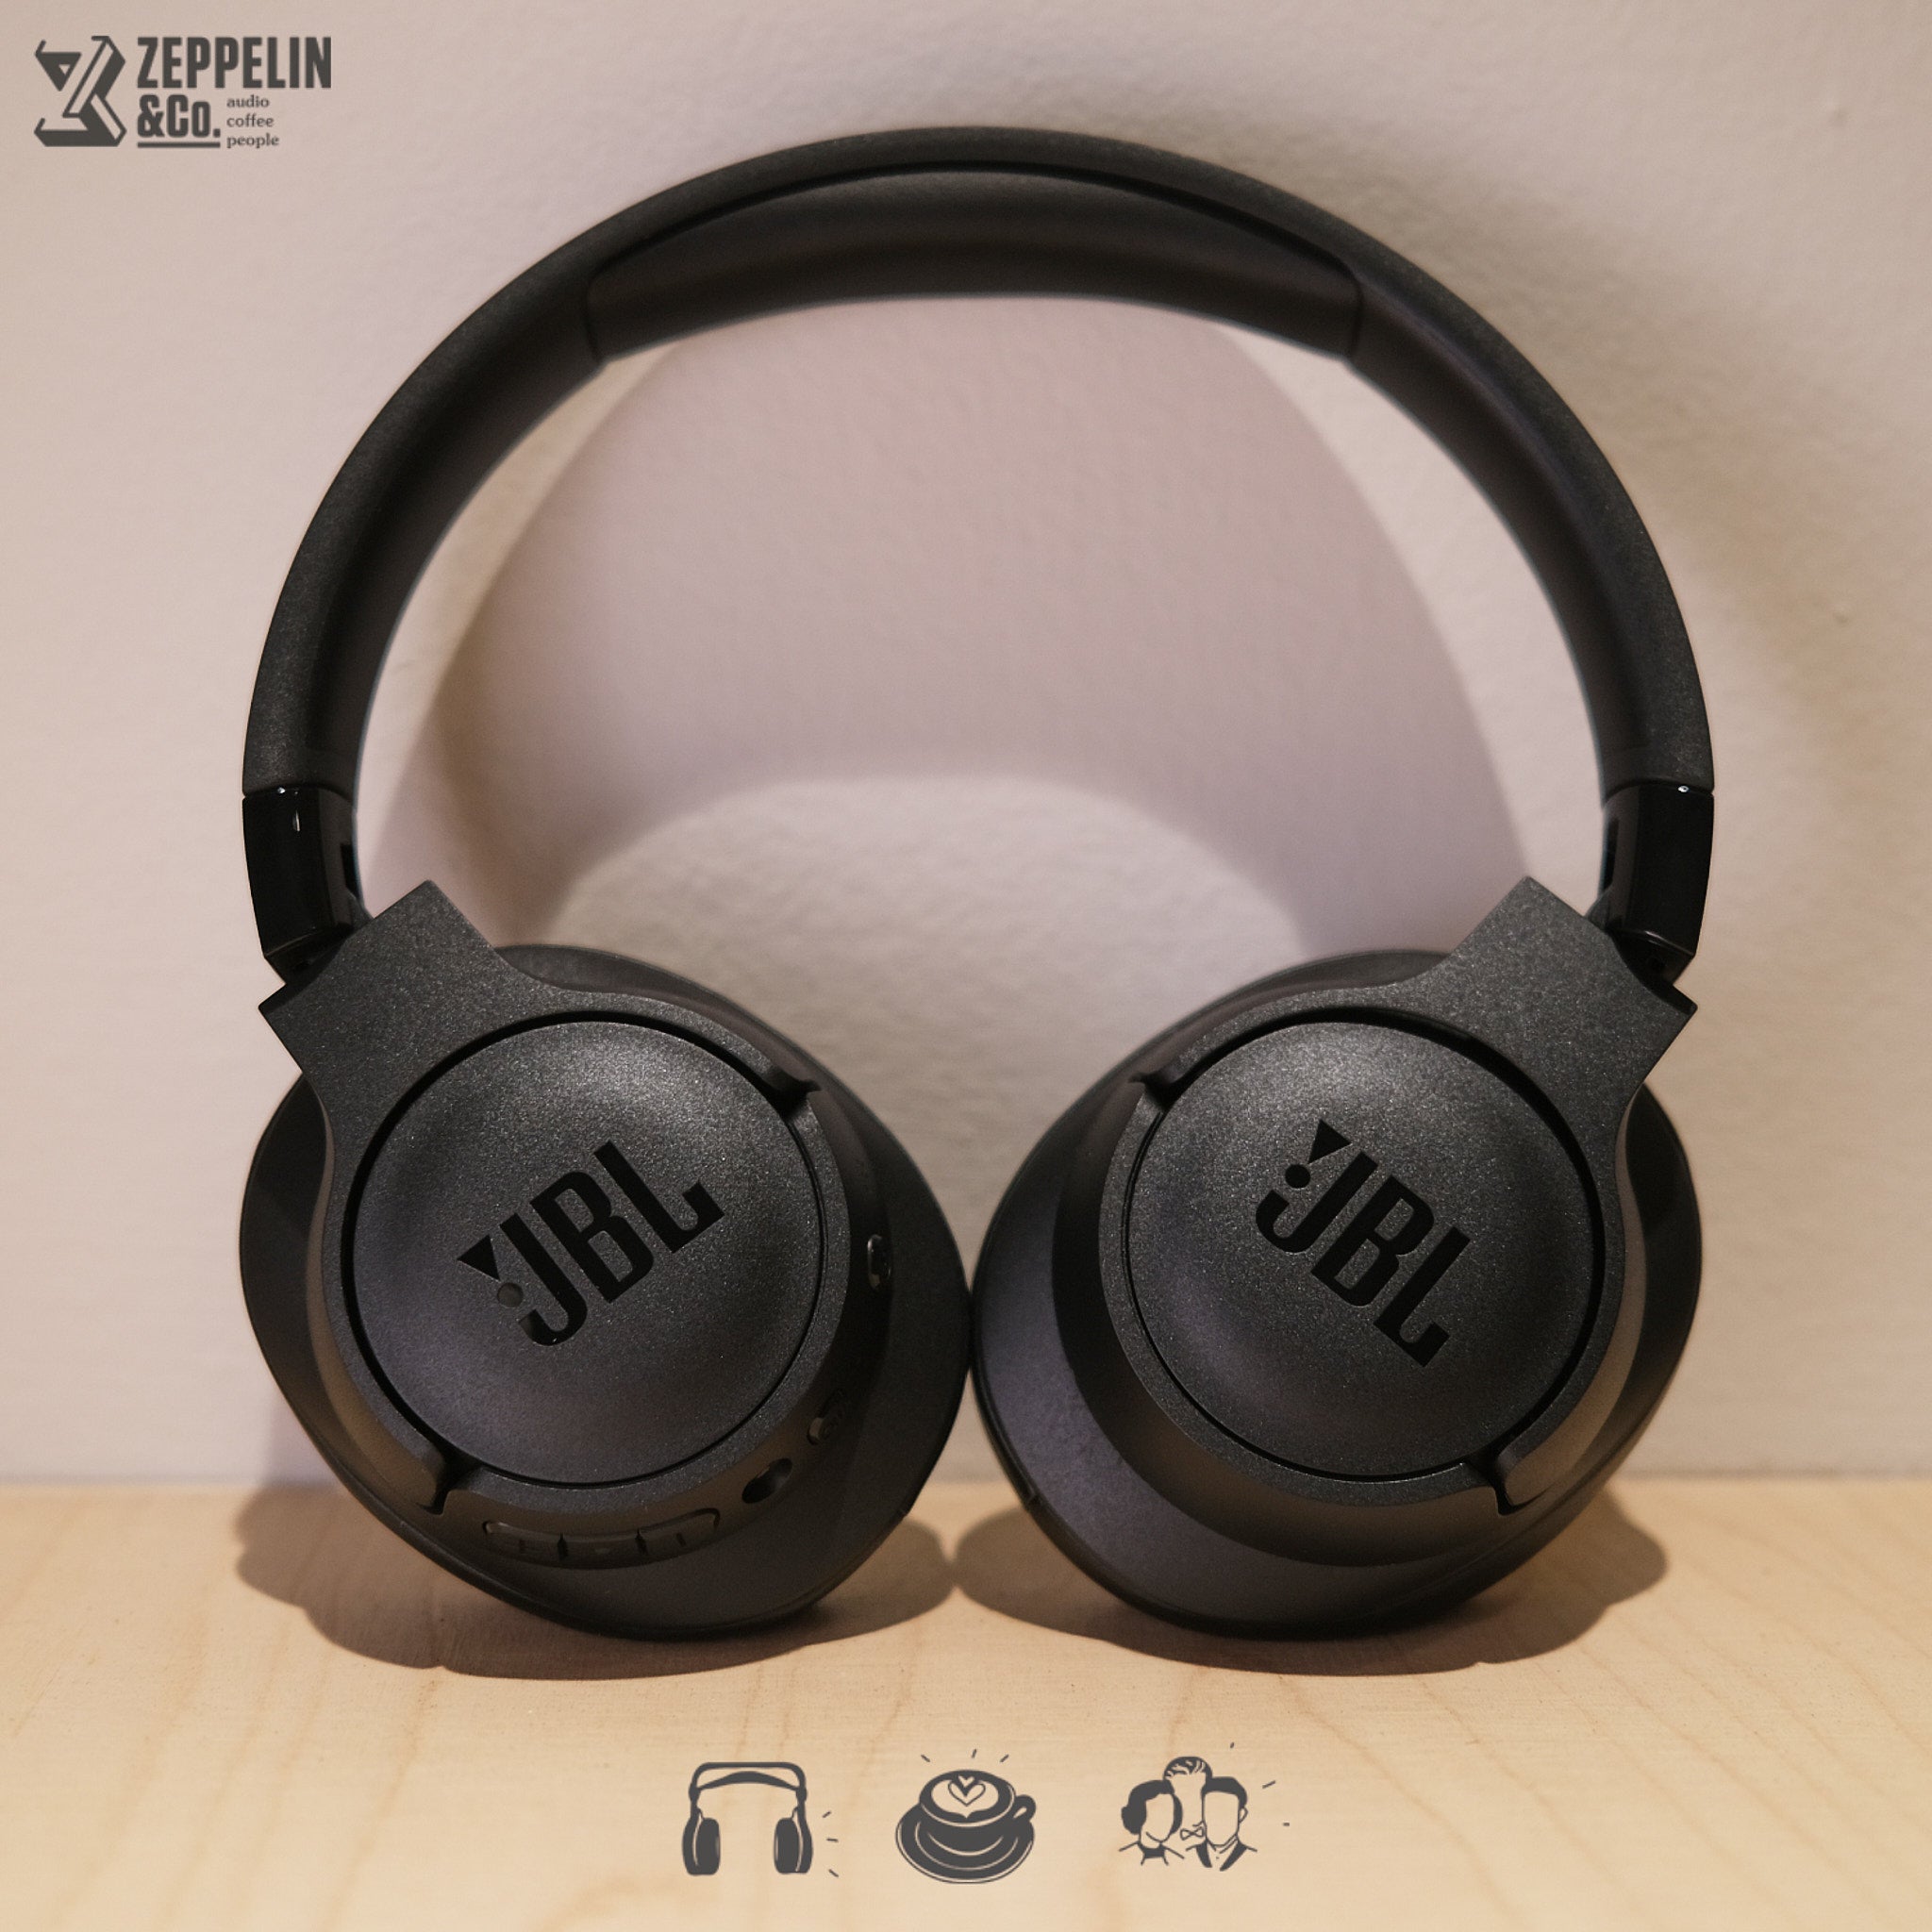 JBL Tune 770NC Adaptive Noise Cancelling Wireless Headphones, Best Price